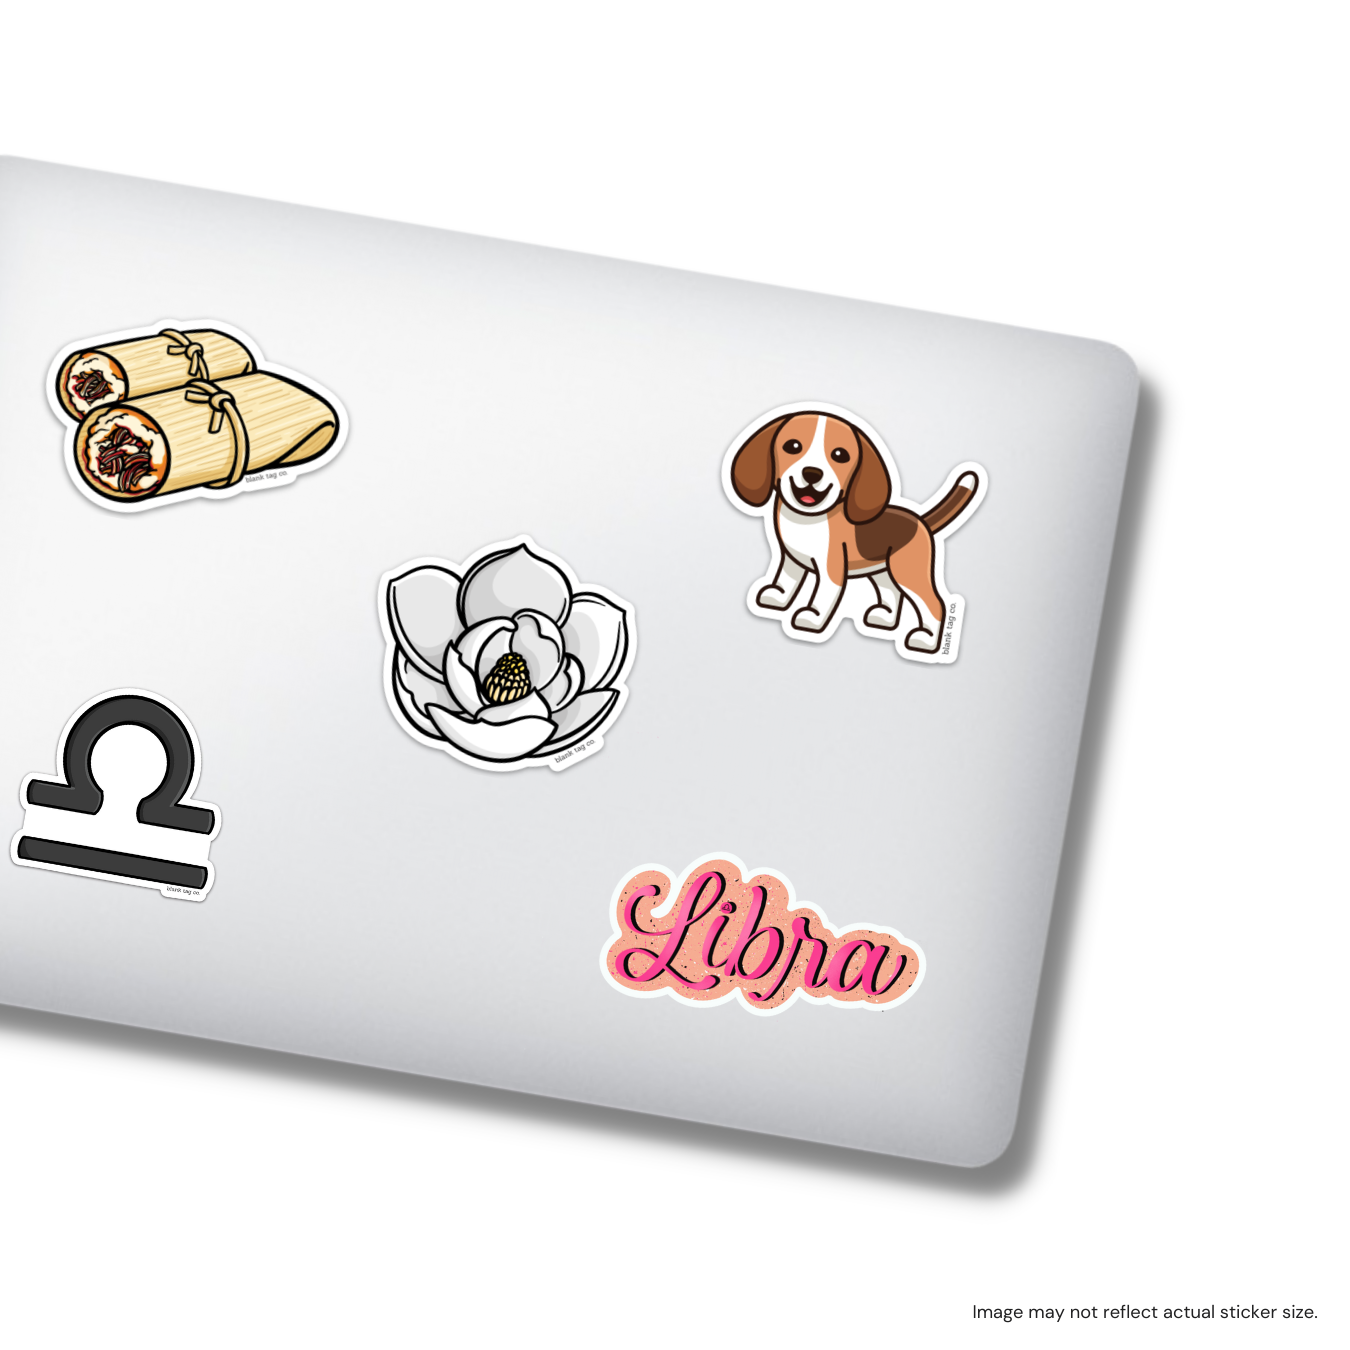 The Beagle Sticker